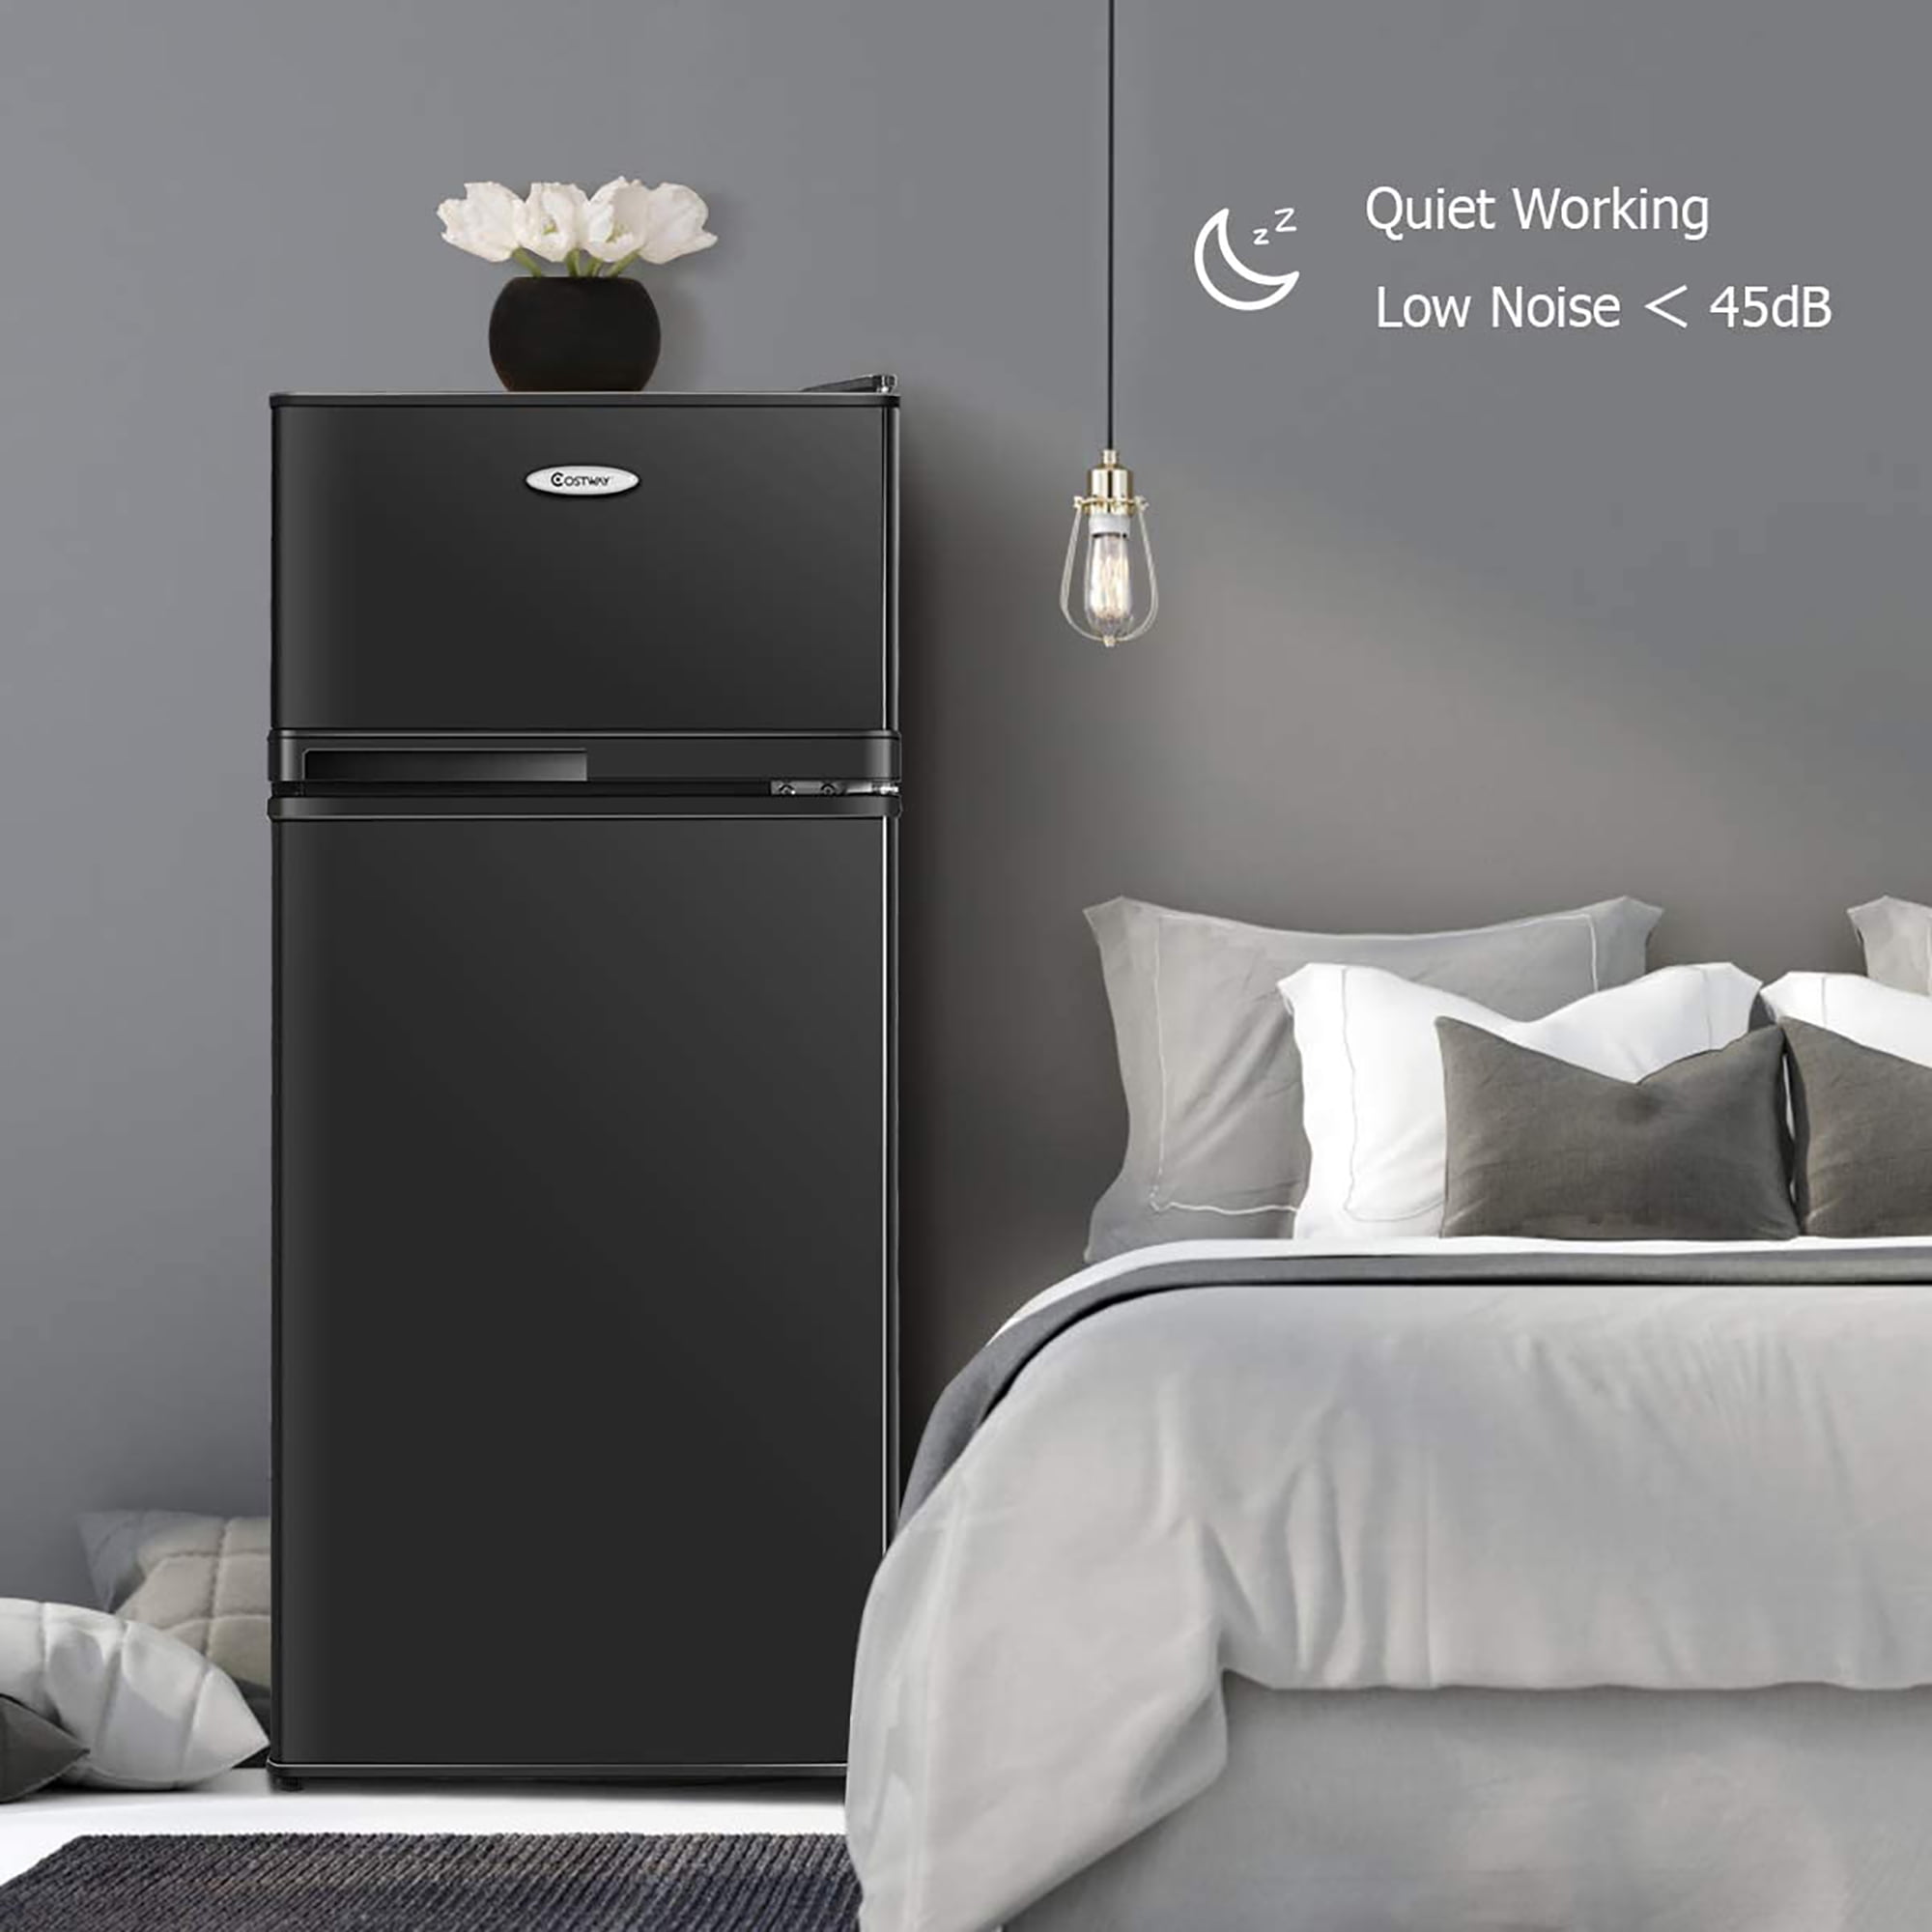 Costway Refrigerator Small Freezer Cooler Fridge Compact 3.2 cu ft. Unit,  Grey 